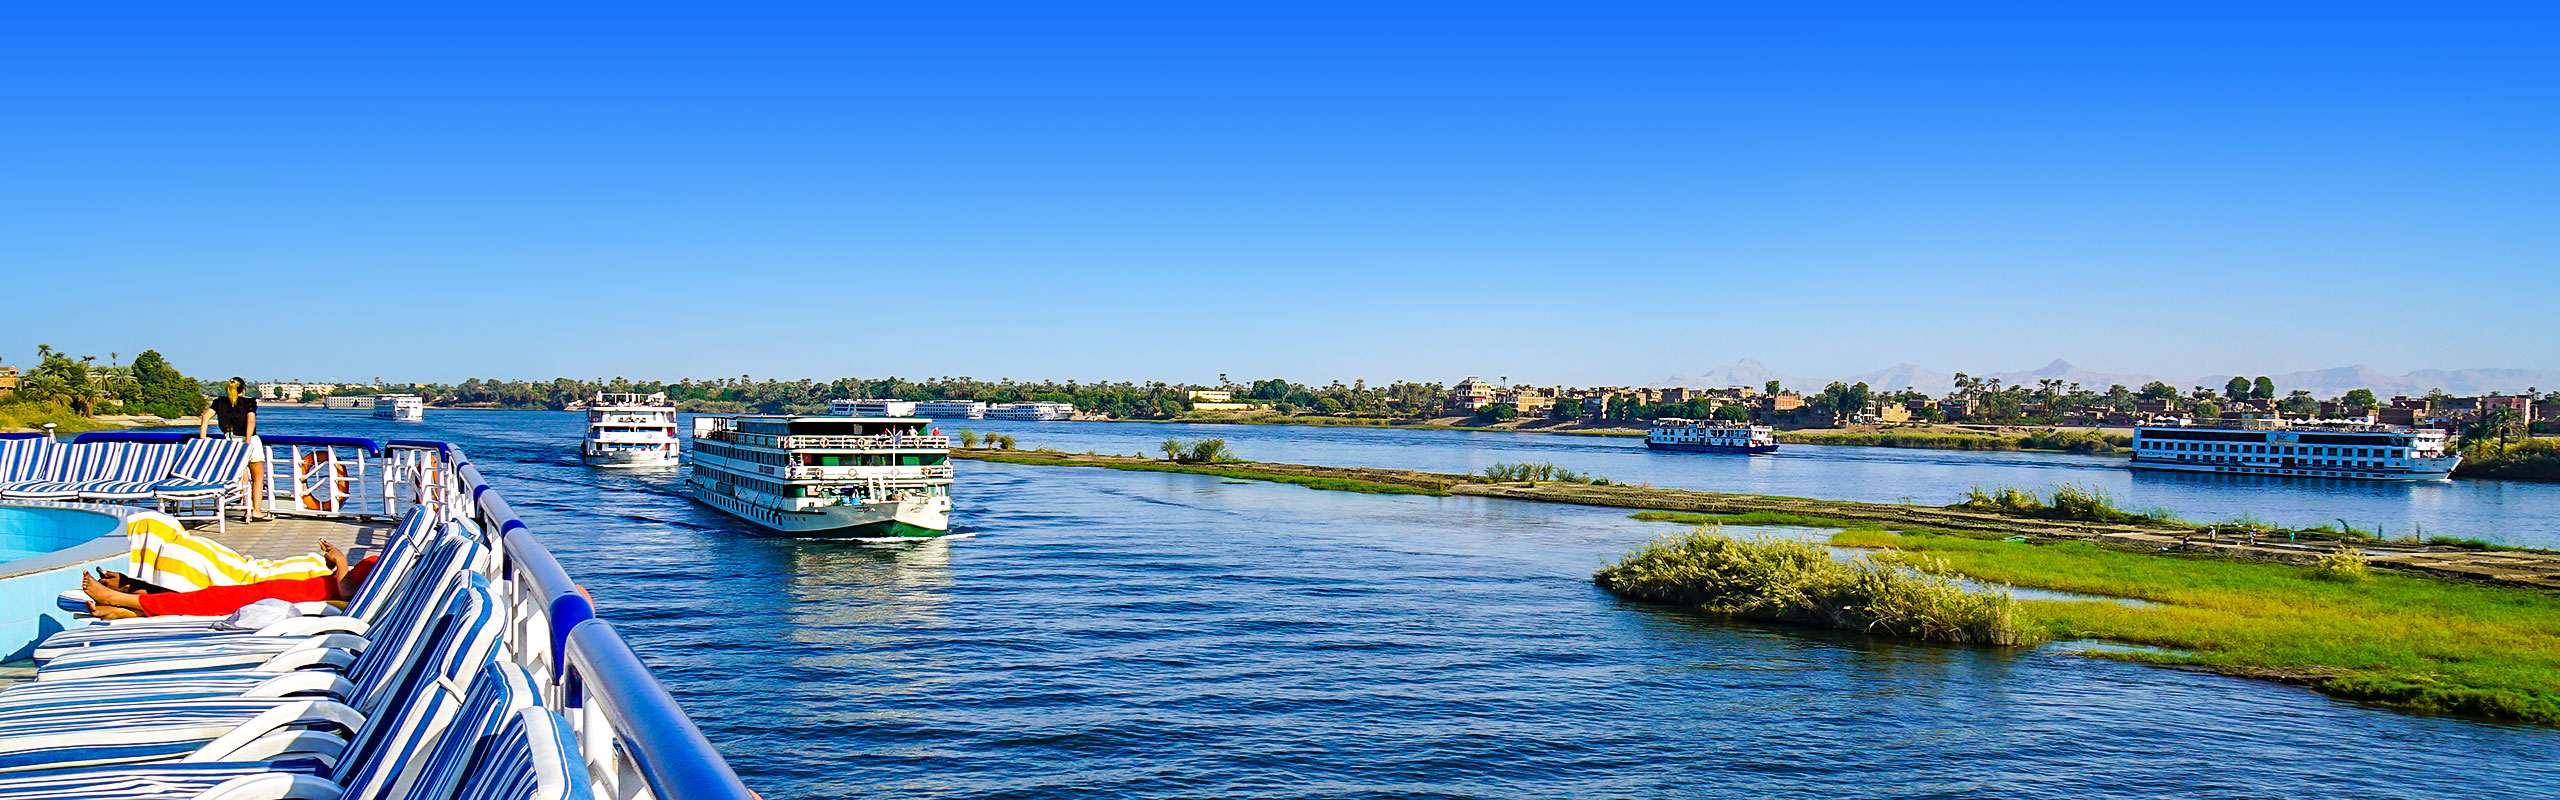 Egyptian Nile River Cruise